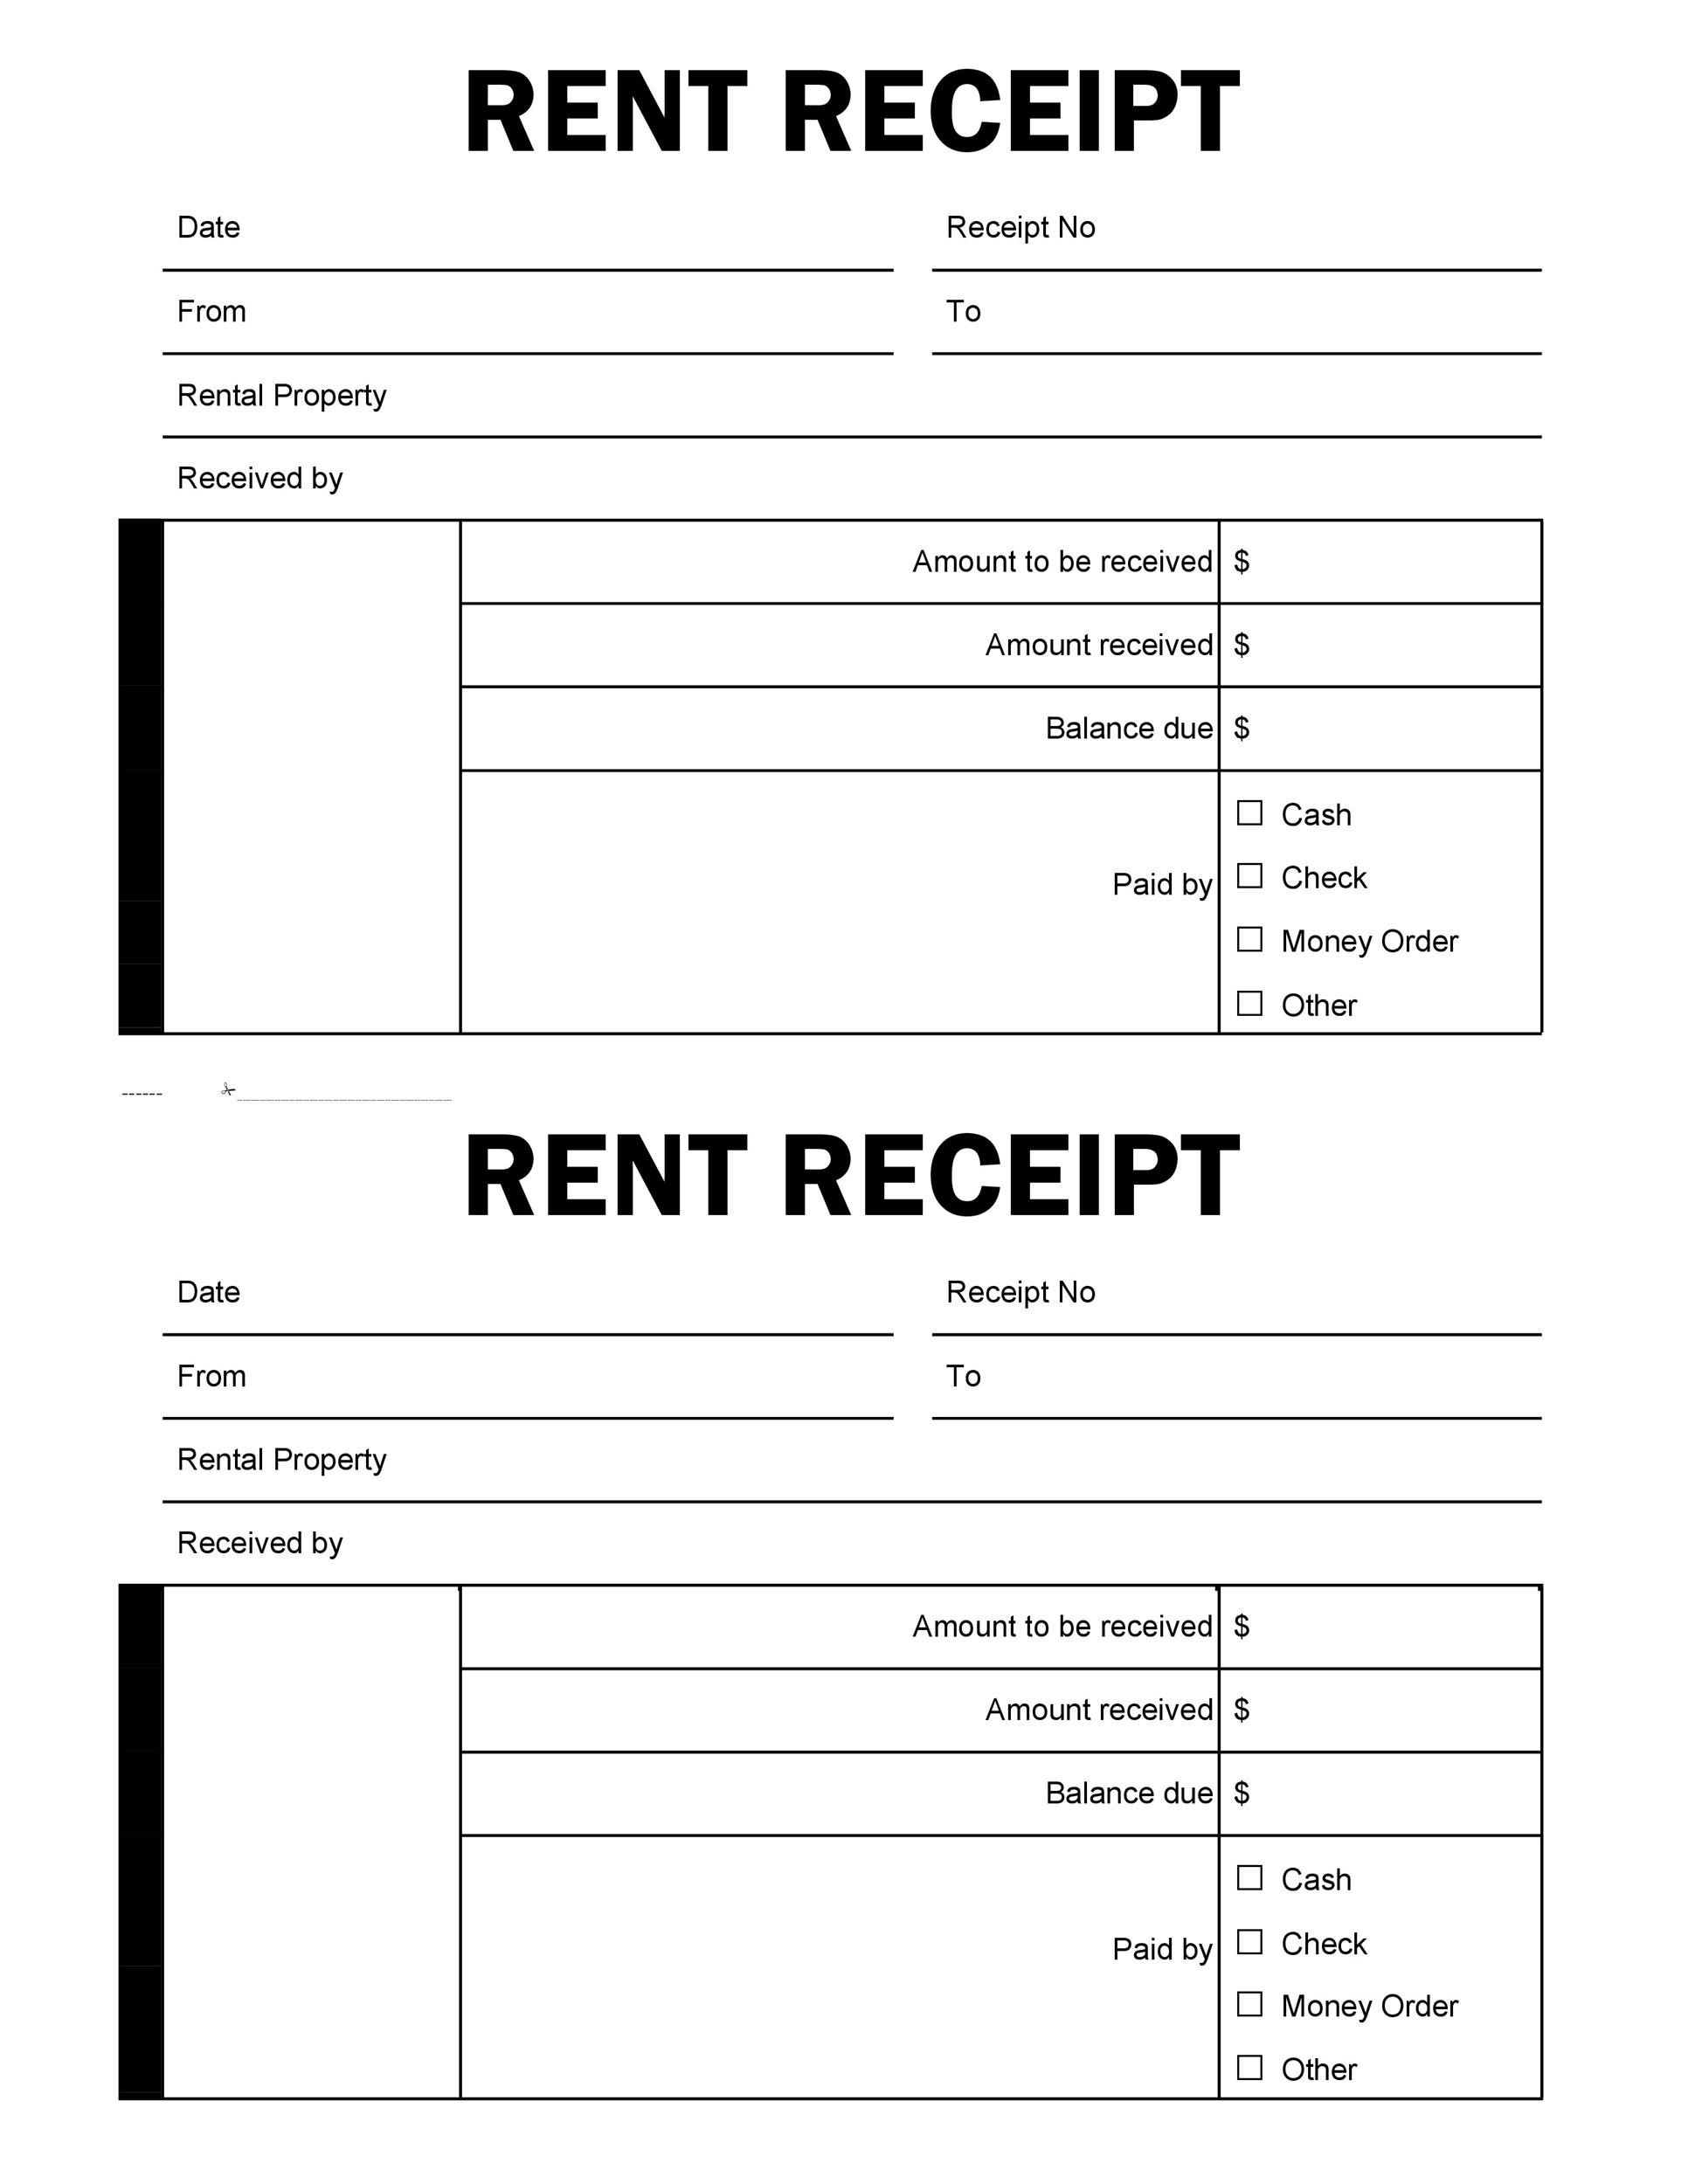 rental-property-rental-receipt-templates-at-allbusinesstemplates